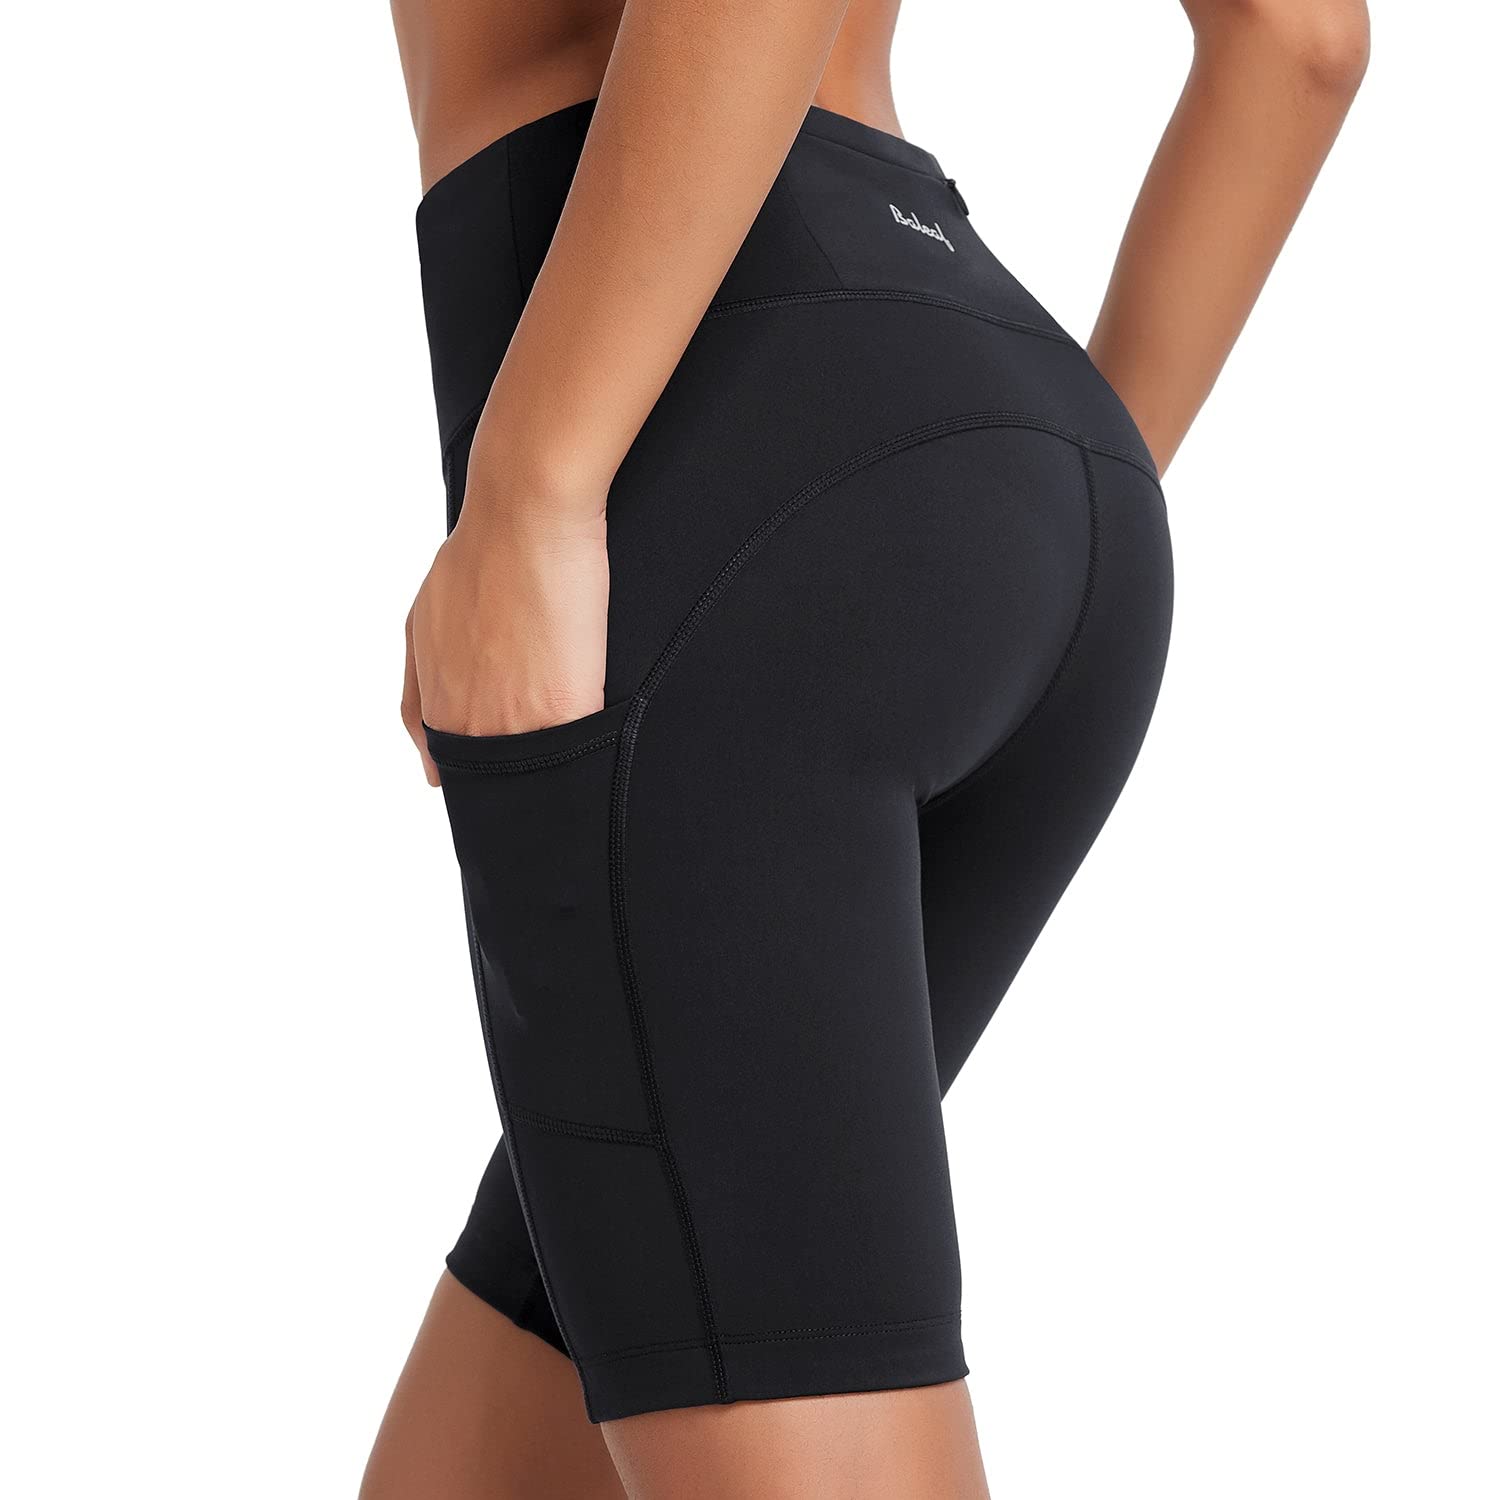  BALEAF Biker Shorts Women Yoga Gym Workout Spandex Running  Volleyball Tummy Control Compression Shorts